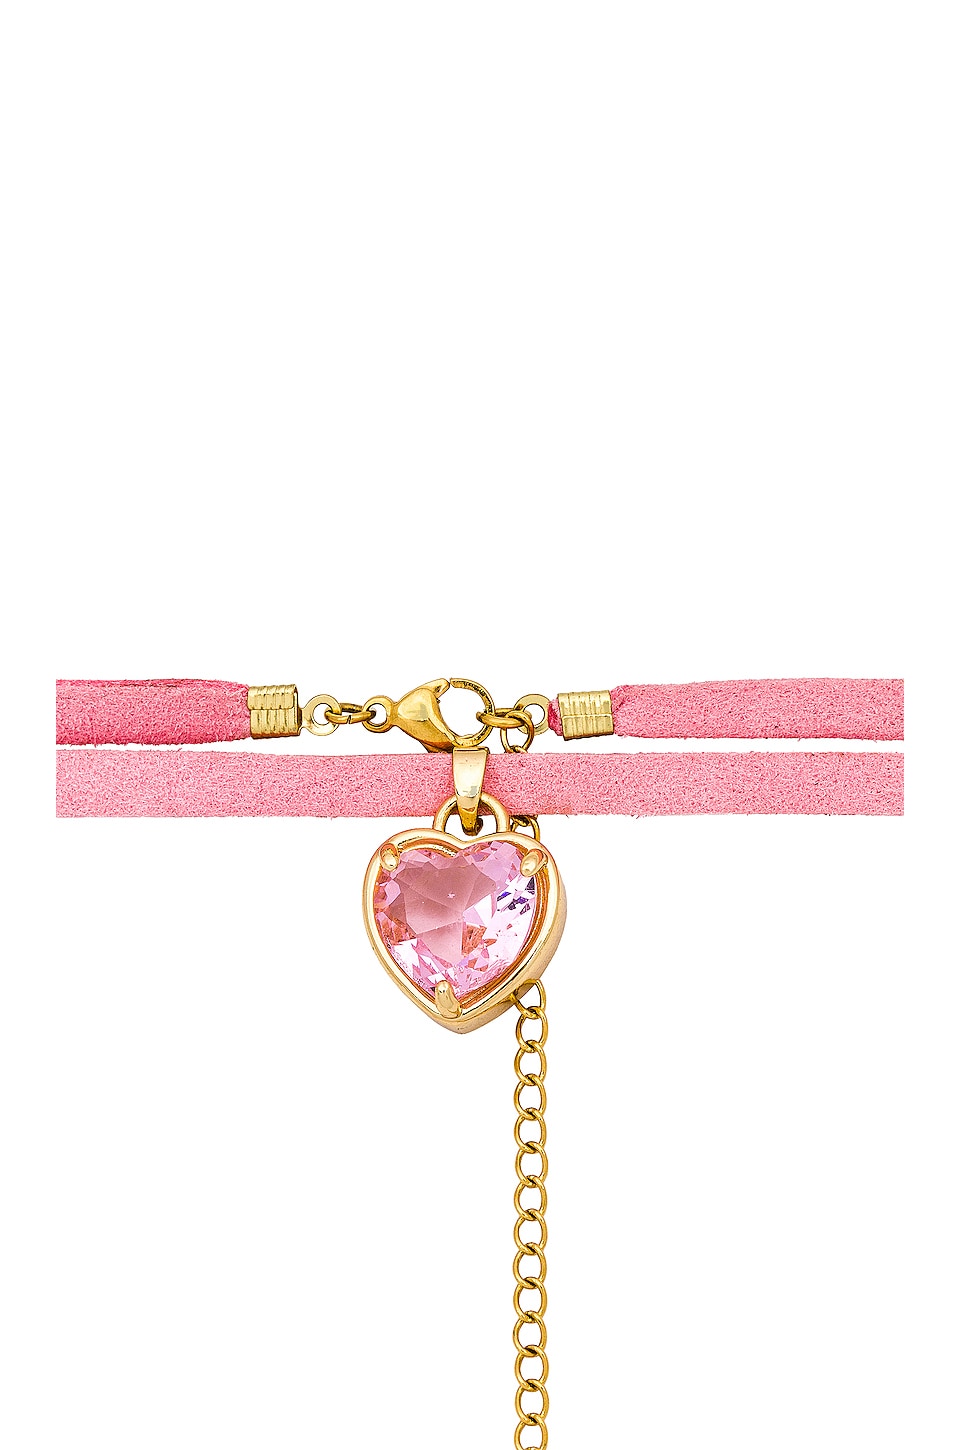 Casa Clara Love Necklace in Dancer Pink